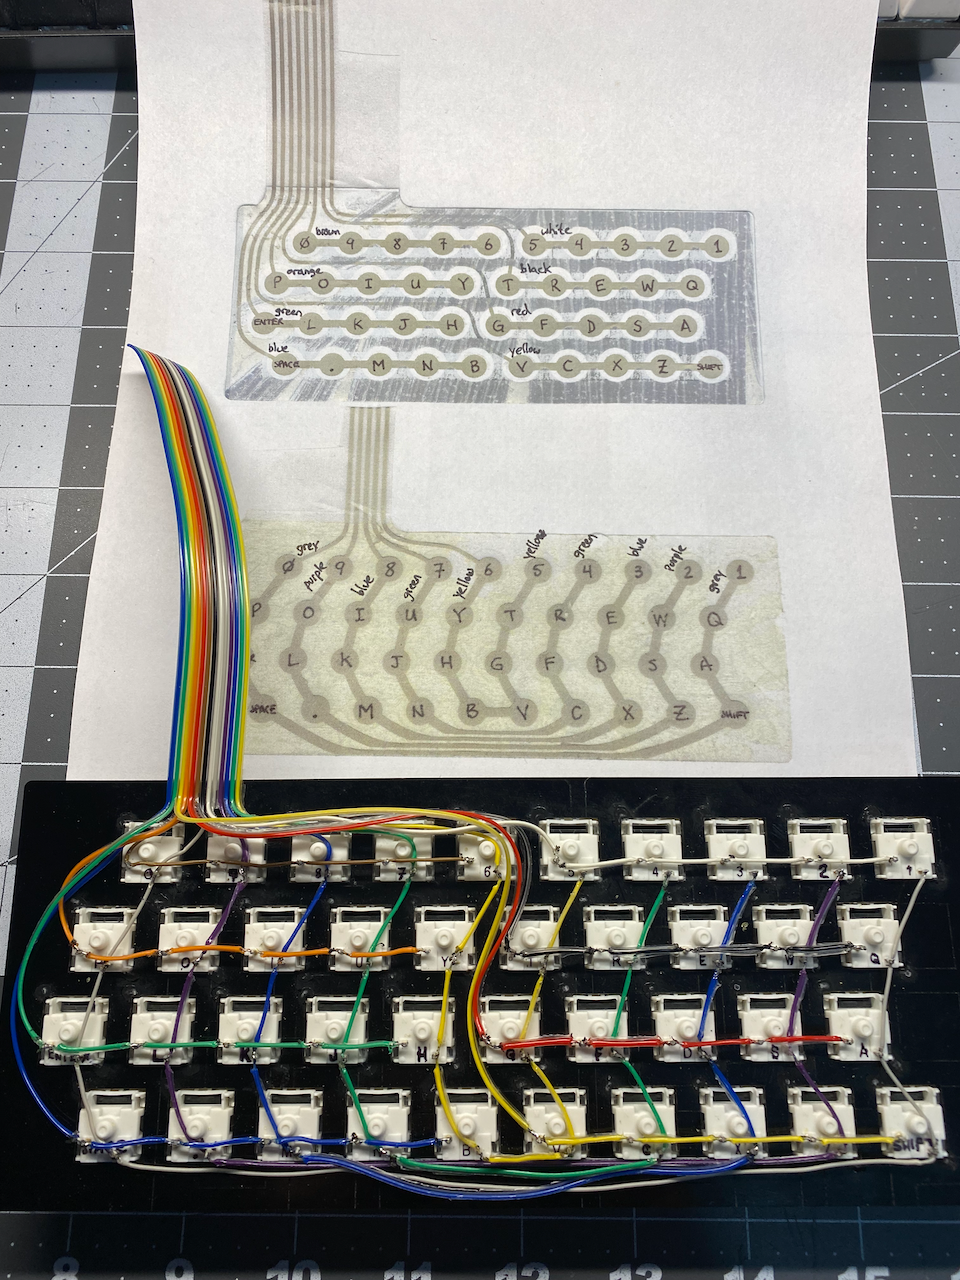 ZX81/TIMEX-SINCLAIR 1000 Custom Mechanical Keyboard Prototype - Part 2